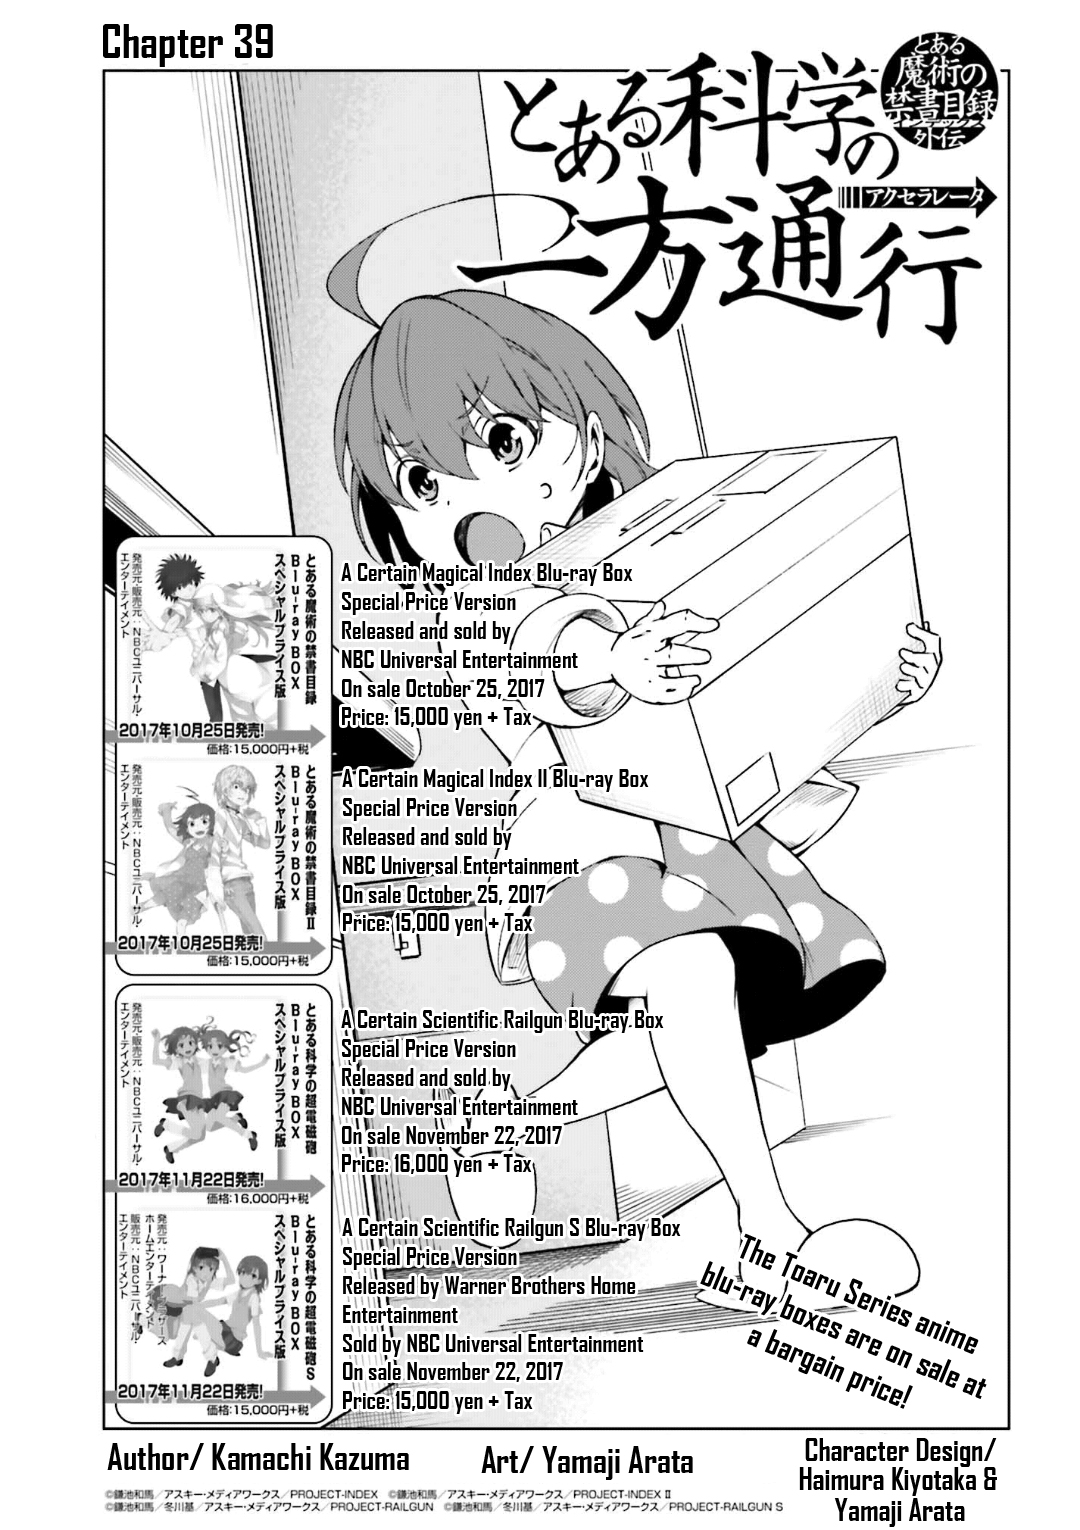 Toaru Kagaku no Accelerator Vol.7 Ch.39